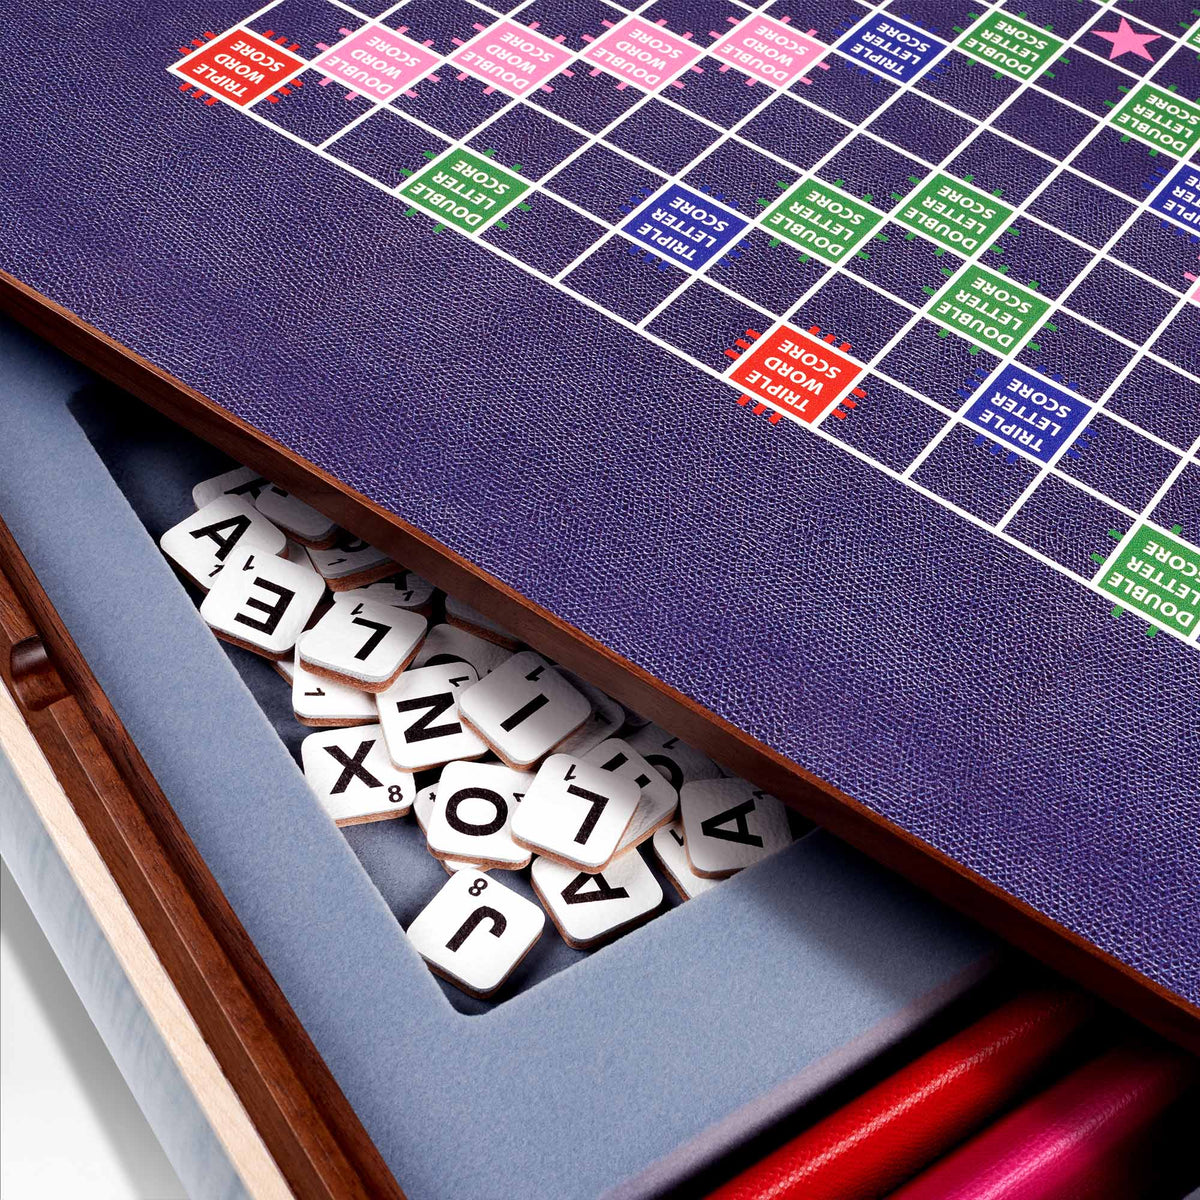 Scrabble & Trivial Pursuit Games Compendium